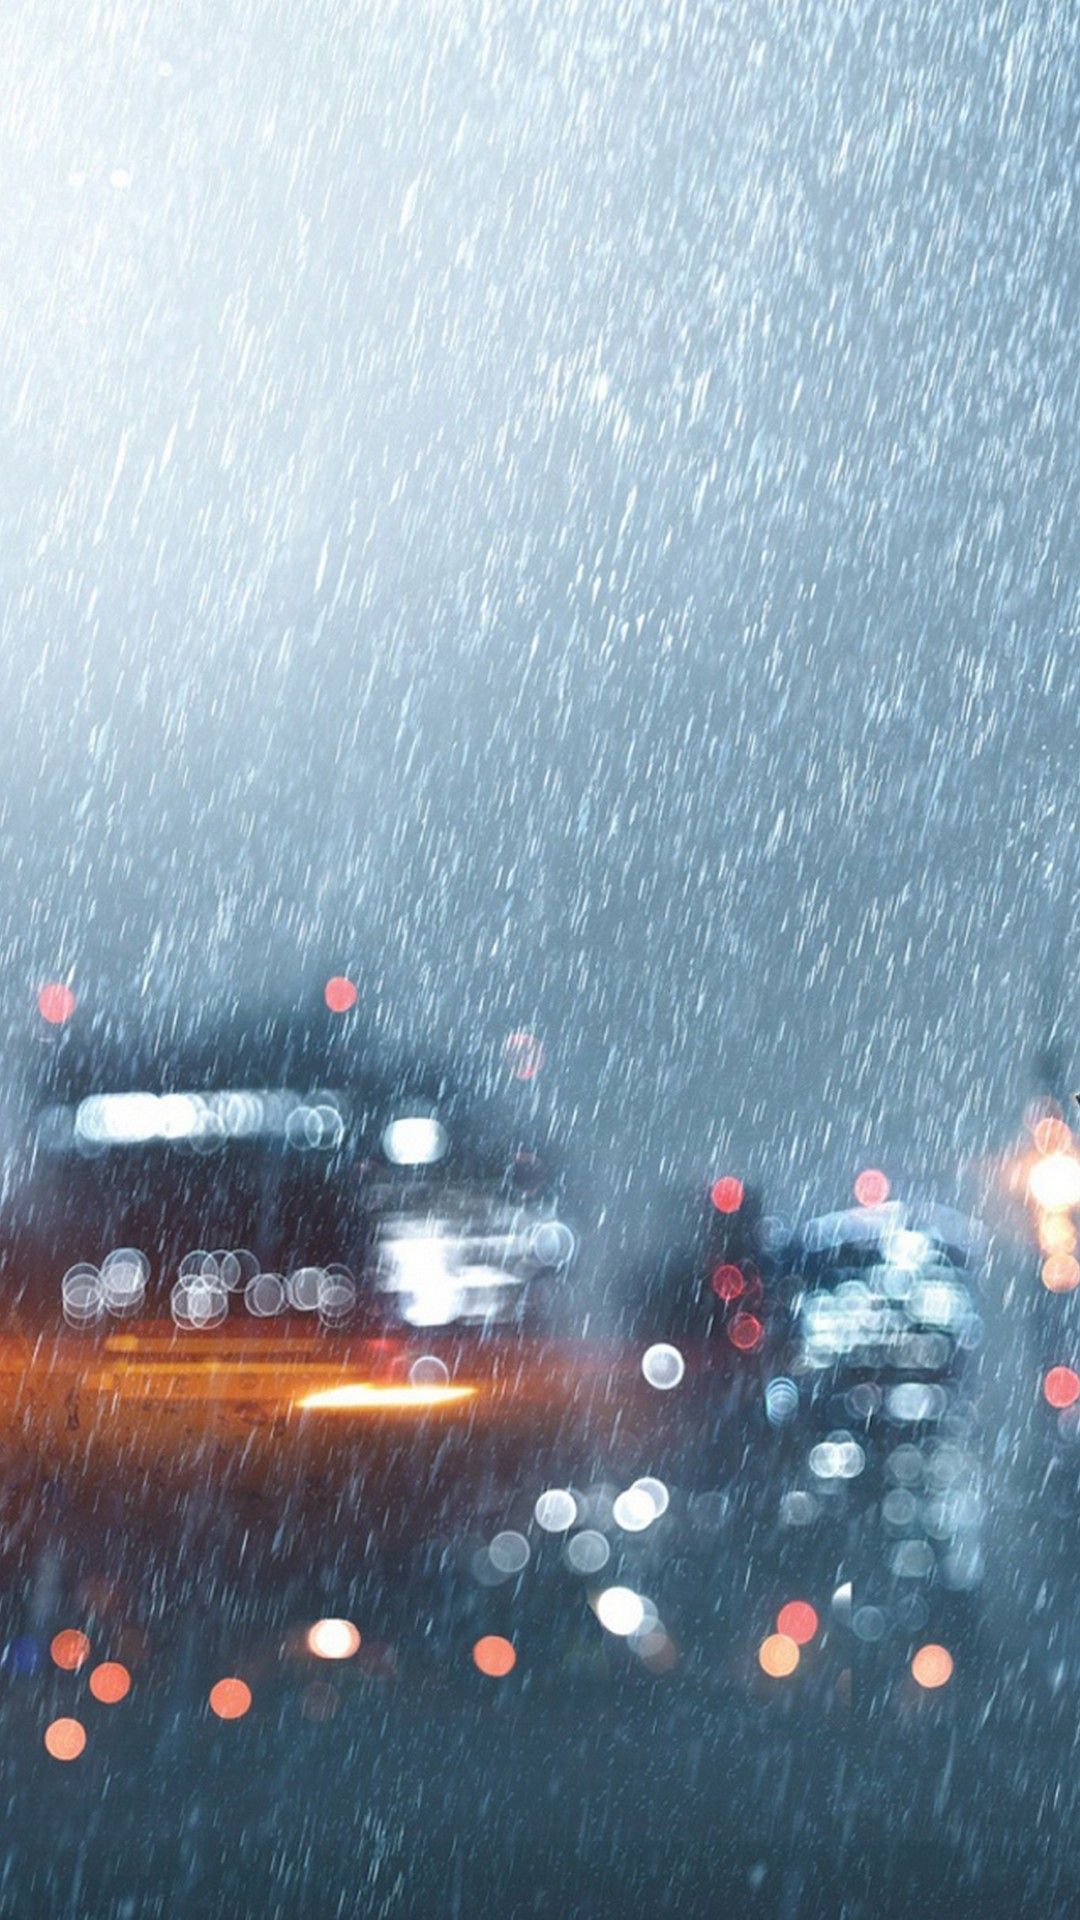 Heavy Rain Wallpaper iPhone iPhone Wallpaper. Rain wallpaper, Rain photo, Rain photography